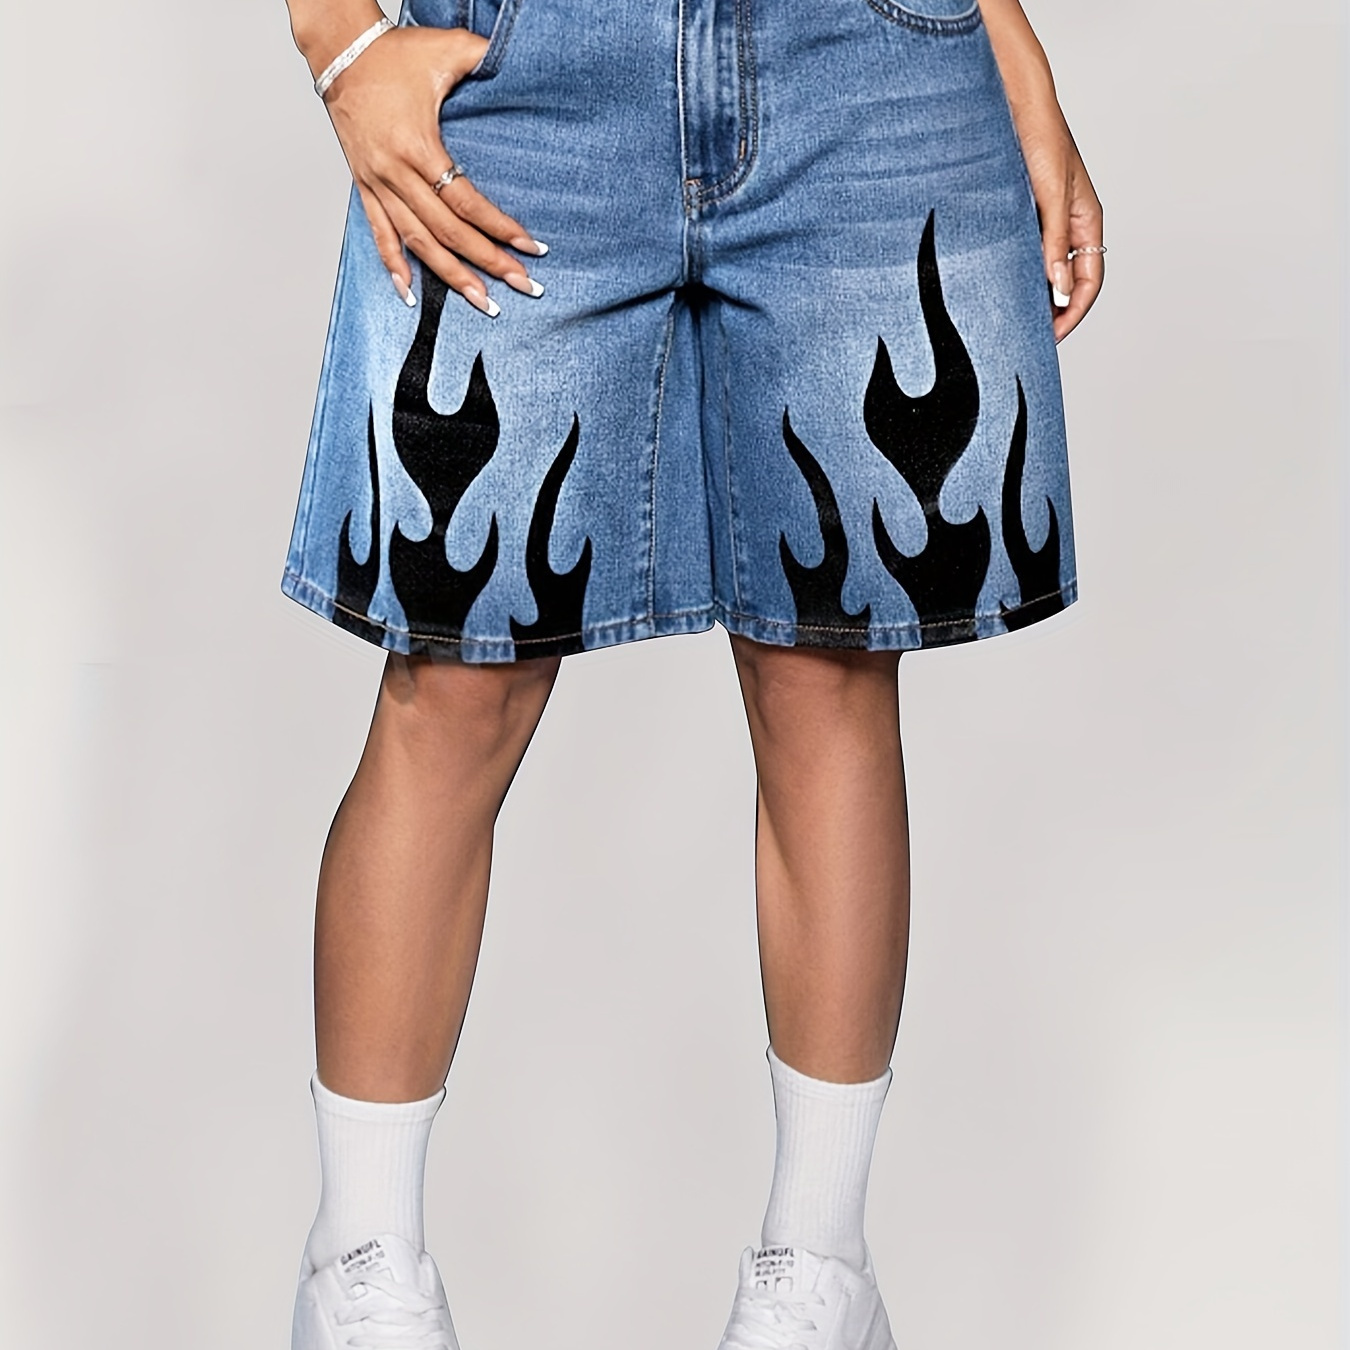 

Flame Print Denim Skirt Shorts, Casual Style, Jorts With Pocket Detail, Streetwear Fashion, Women's Summer Bottoms